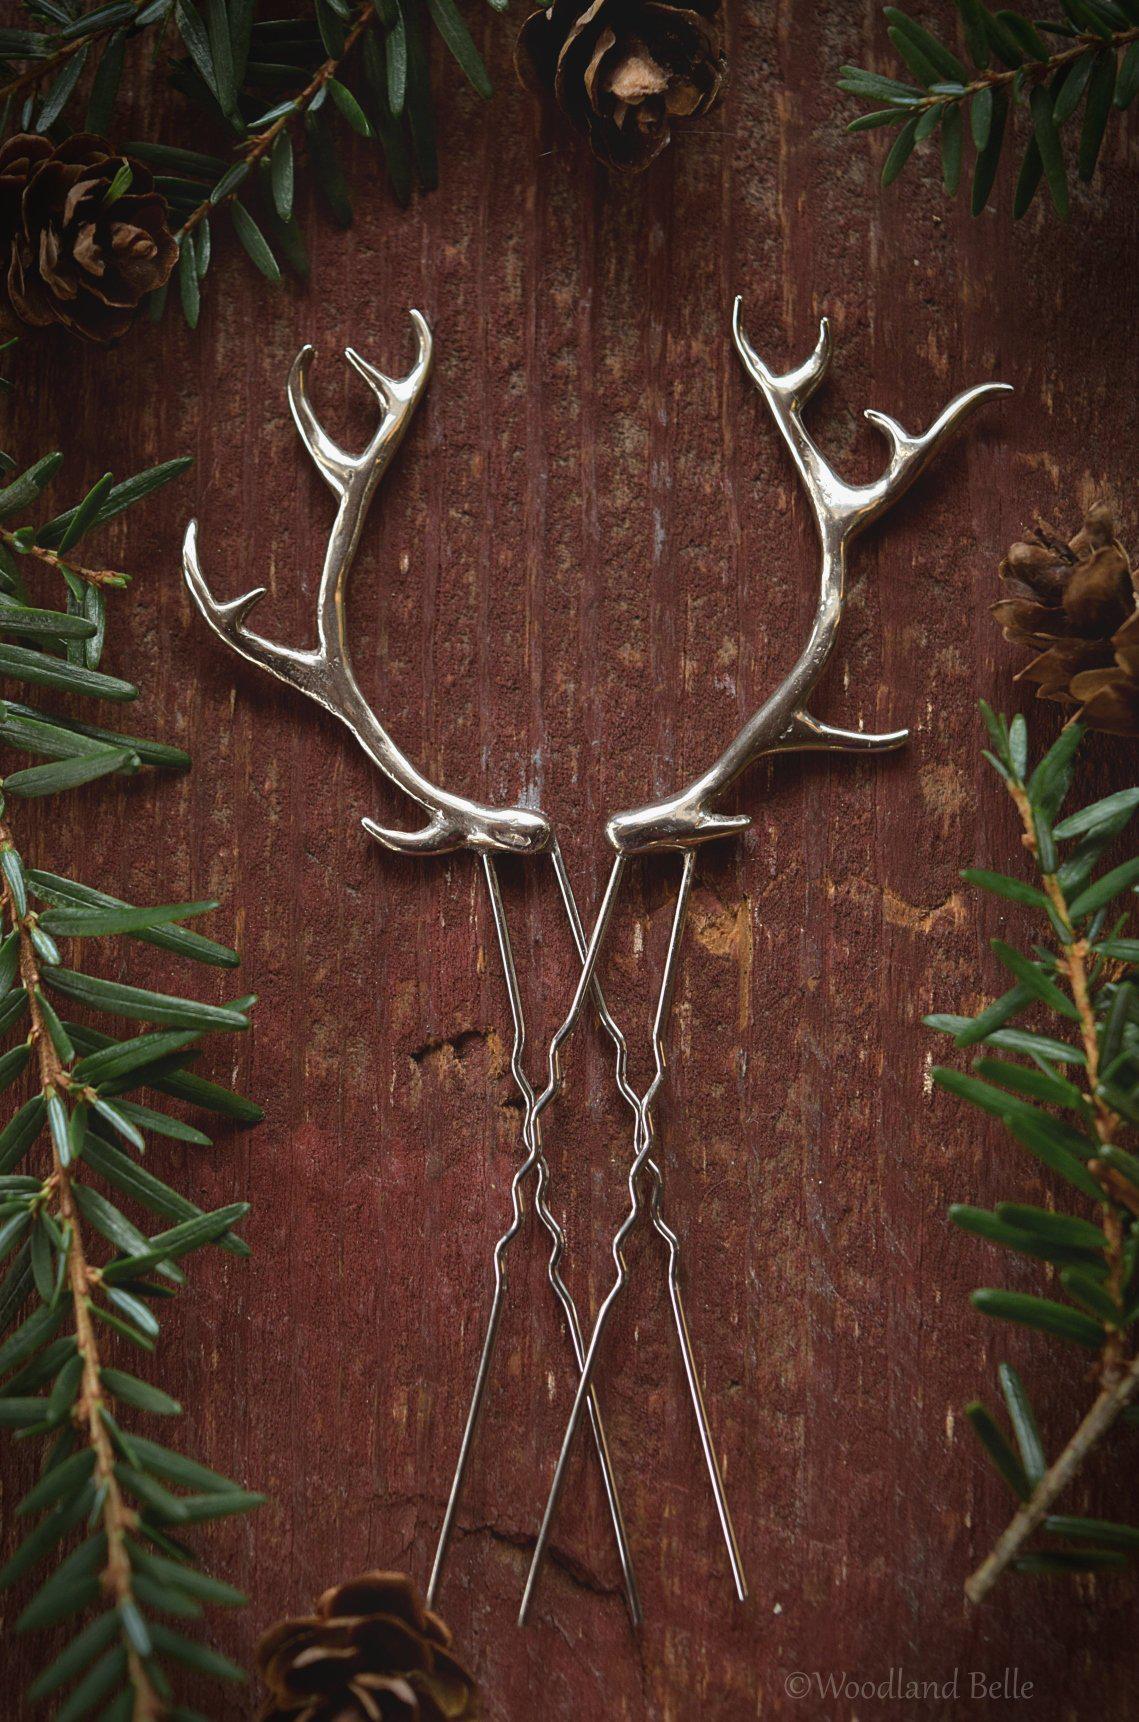 Antler Hair Pins - Silver Bronze Metal Antler Hair Sticks - Mori Forest Girl - For LARP, Cosplay, Renaissance Festival - by Woodland Belle